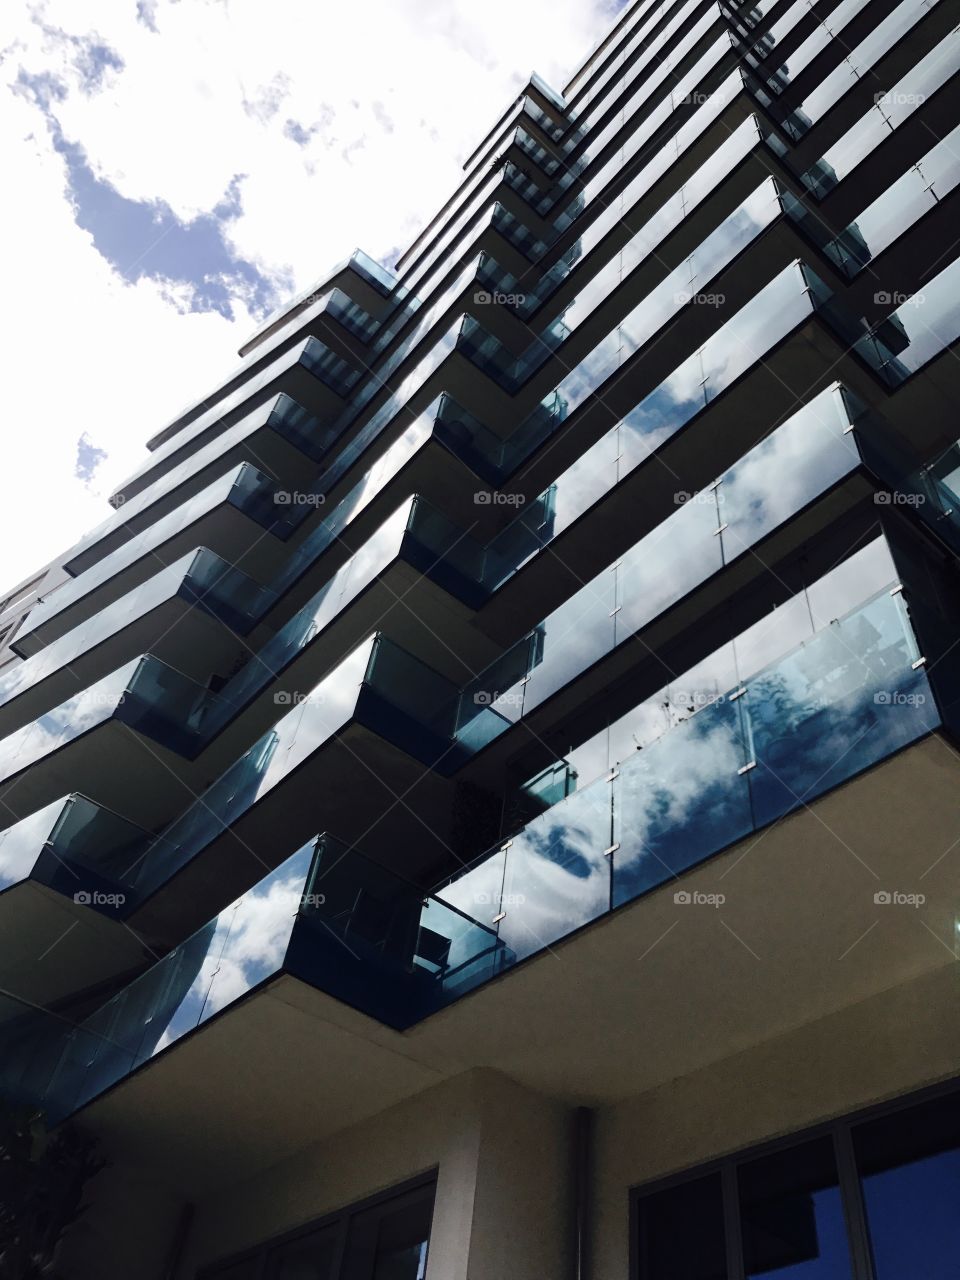 #buildings #glass #balcony #tall